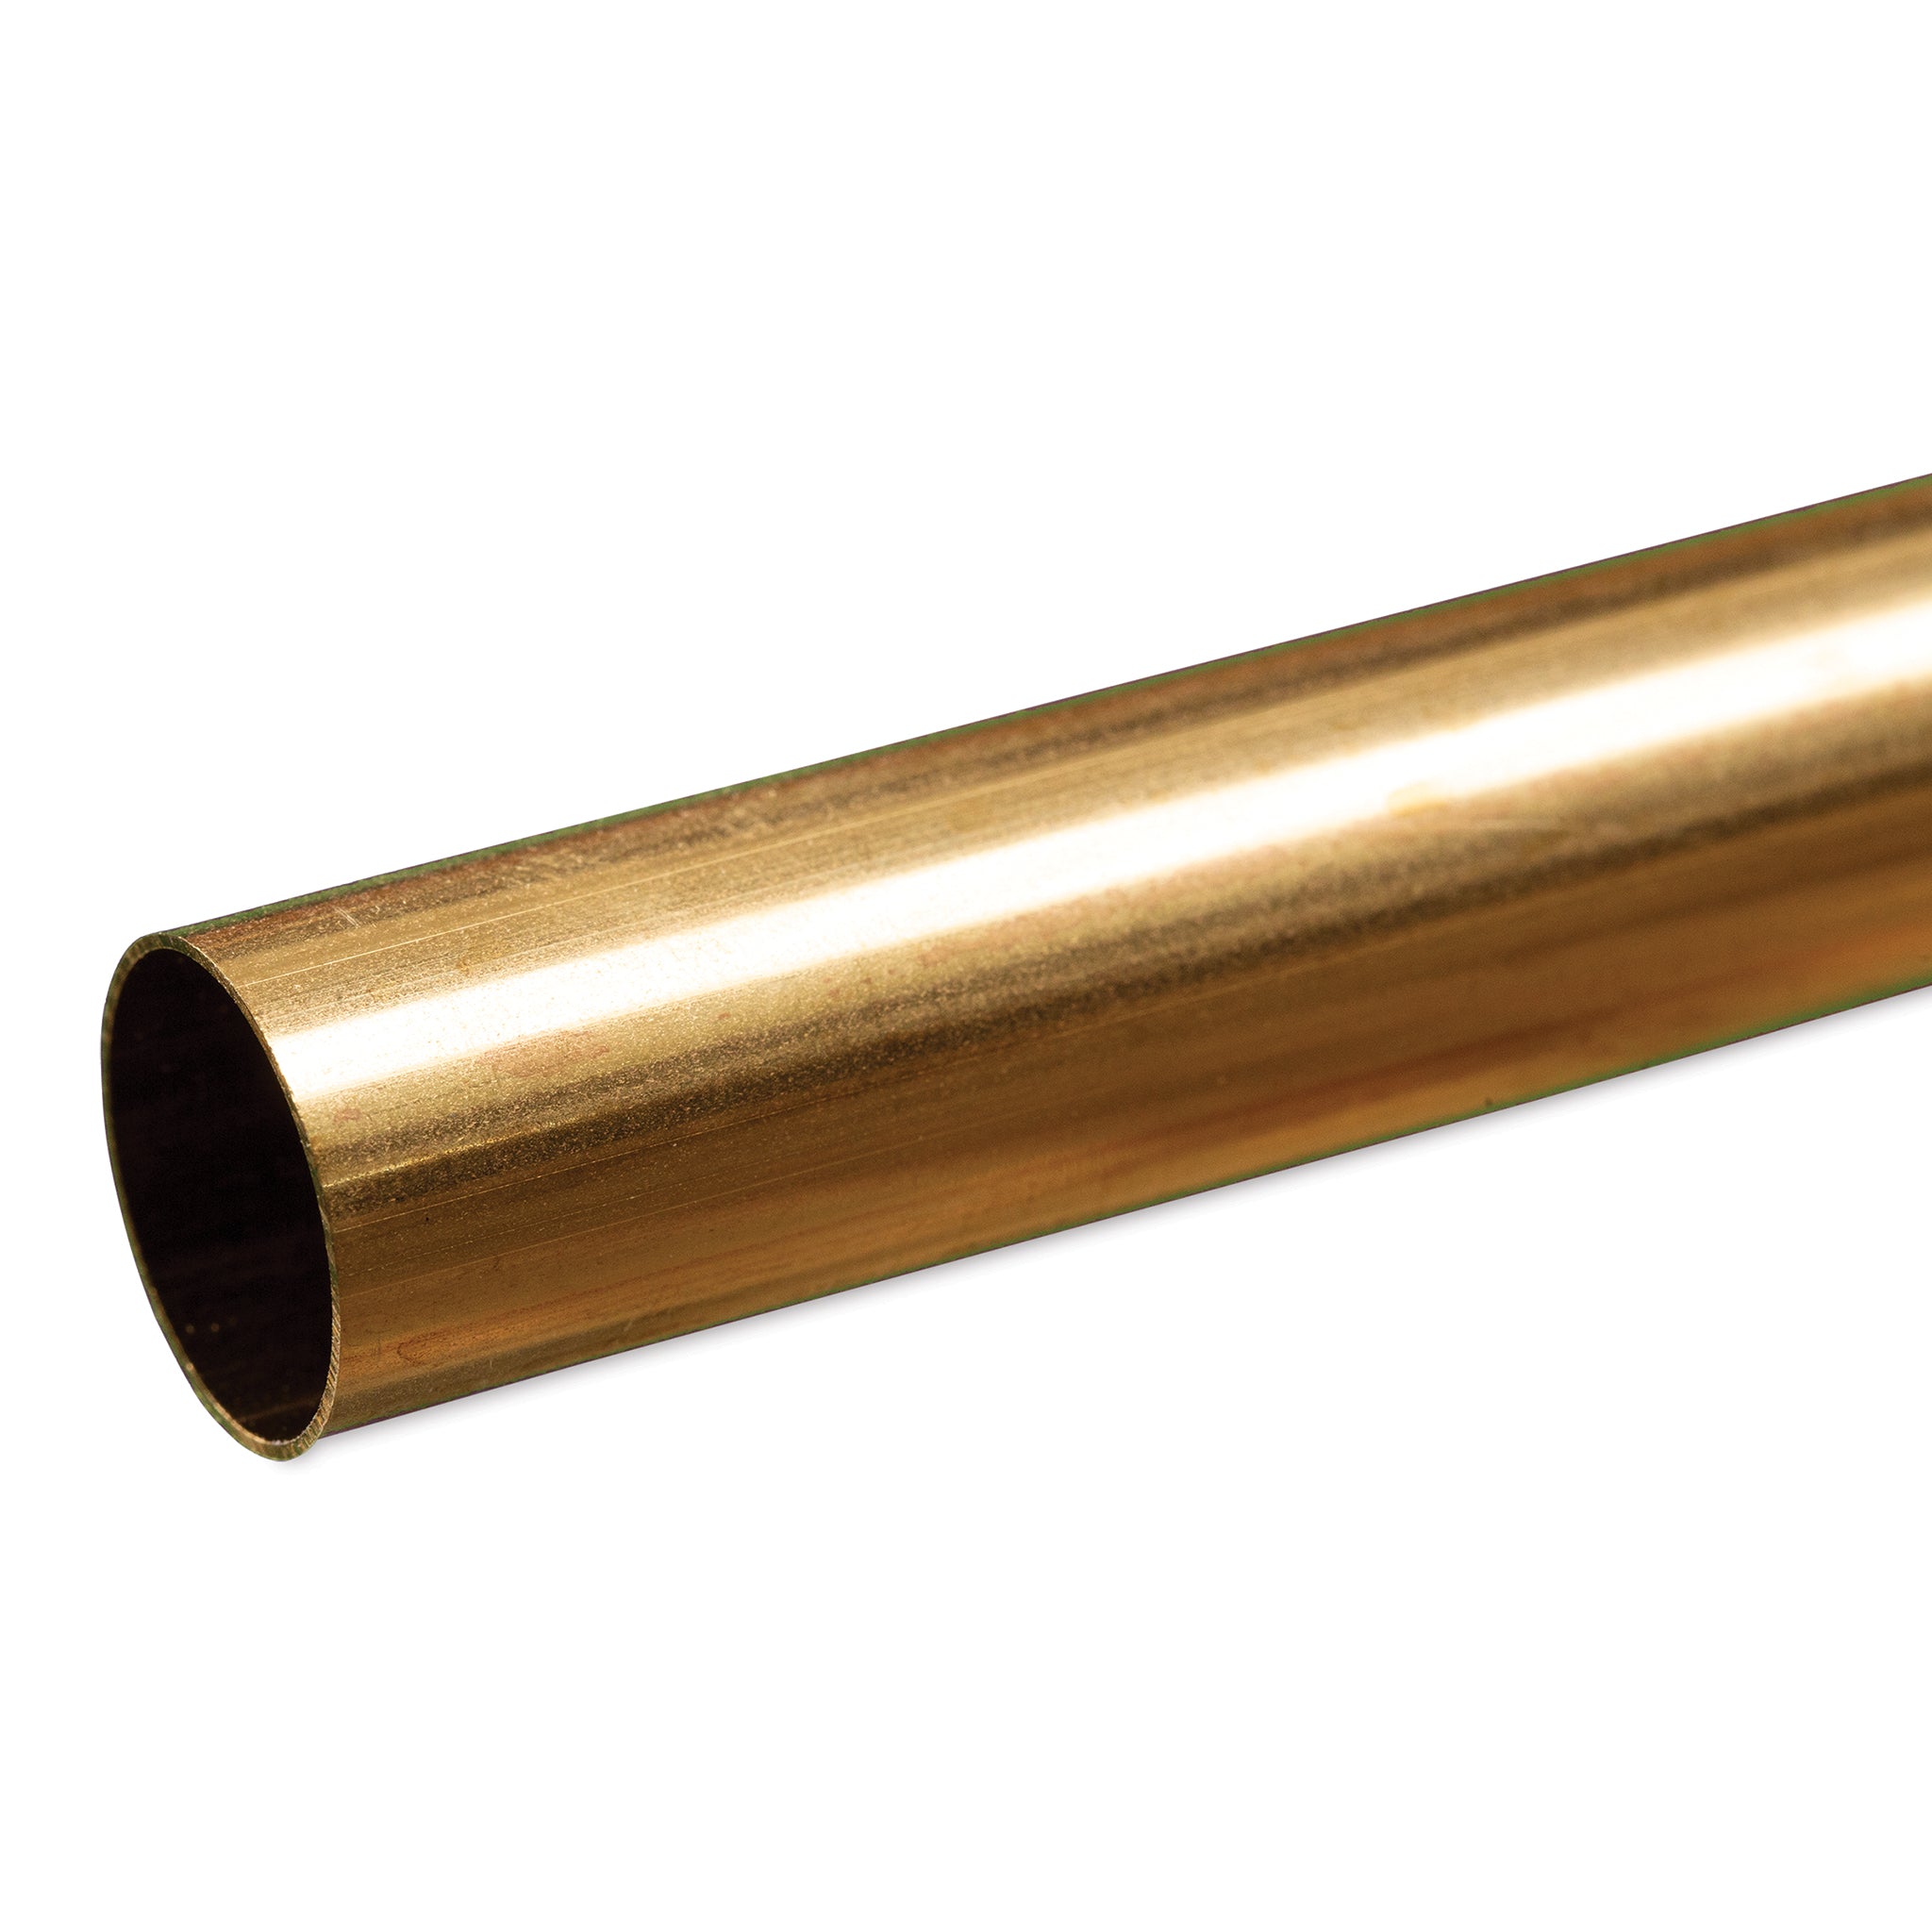 K&S Metals 8140 Round Brass Tube 17/32" OD x 0.014" Wall x 12" Long (1 Piece)